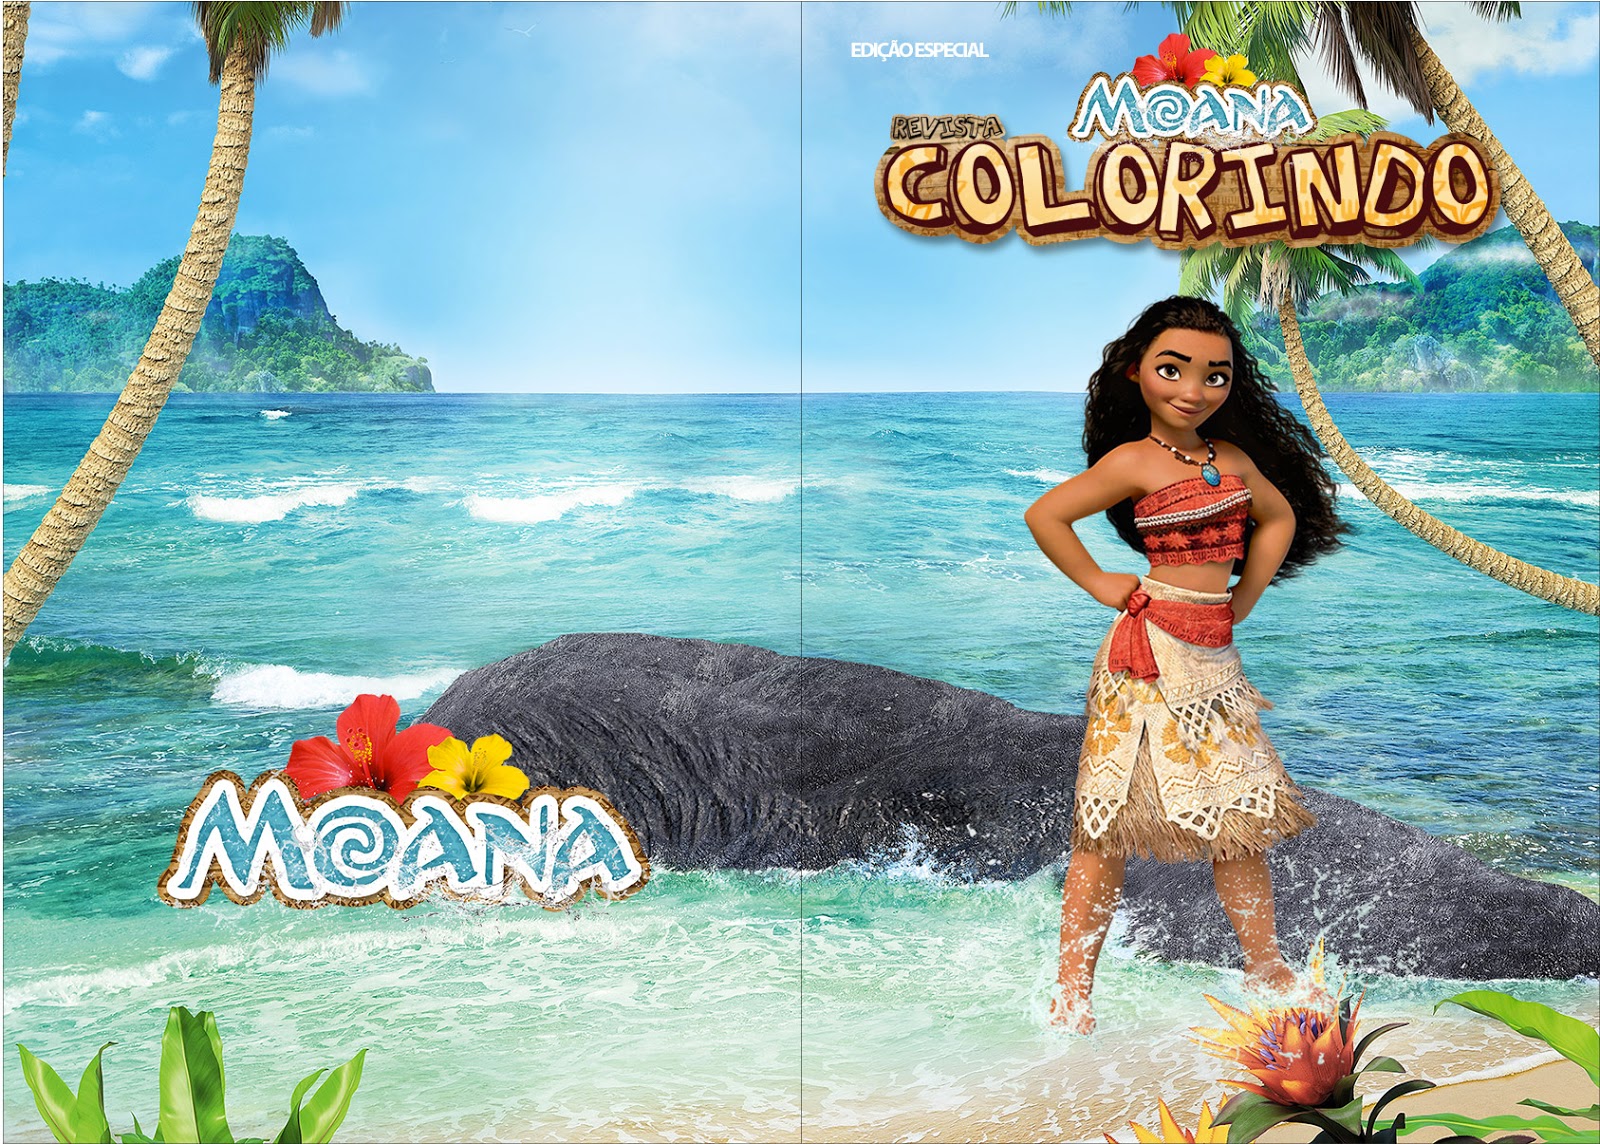 Moana Coloring Book - Jogue gratuitamente na Friv5